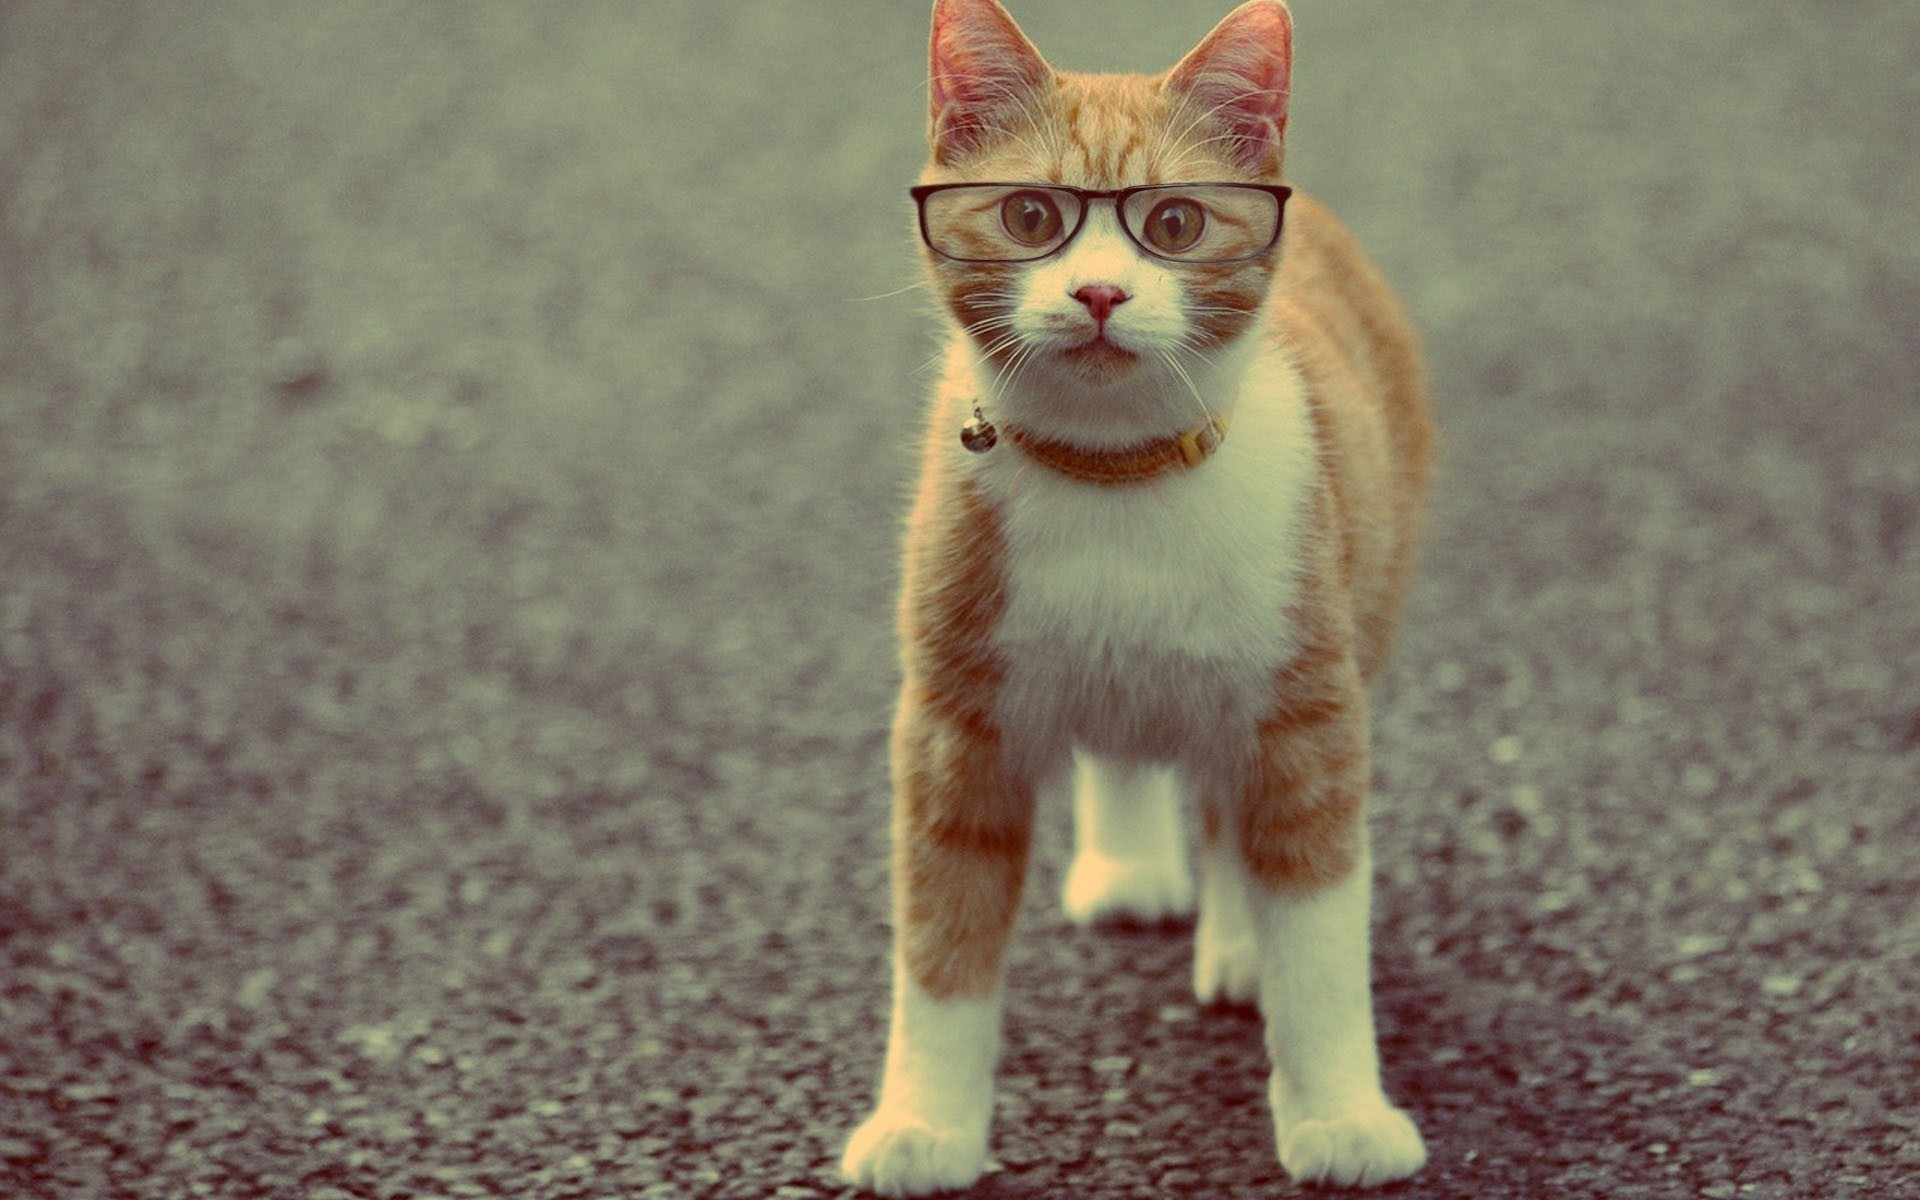 Mac Funny Glasses Eyesanimals Whiskers Cute Cats Face Humor Downloadcool Felines Best Friend Smart Phone 1920x1200 Wallpaper Hd 1920x1200